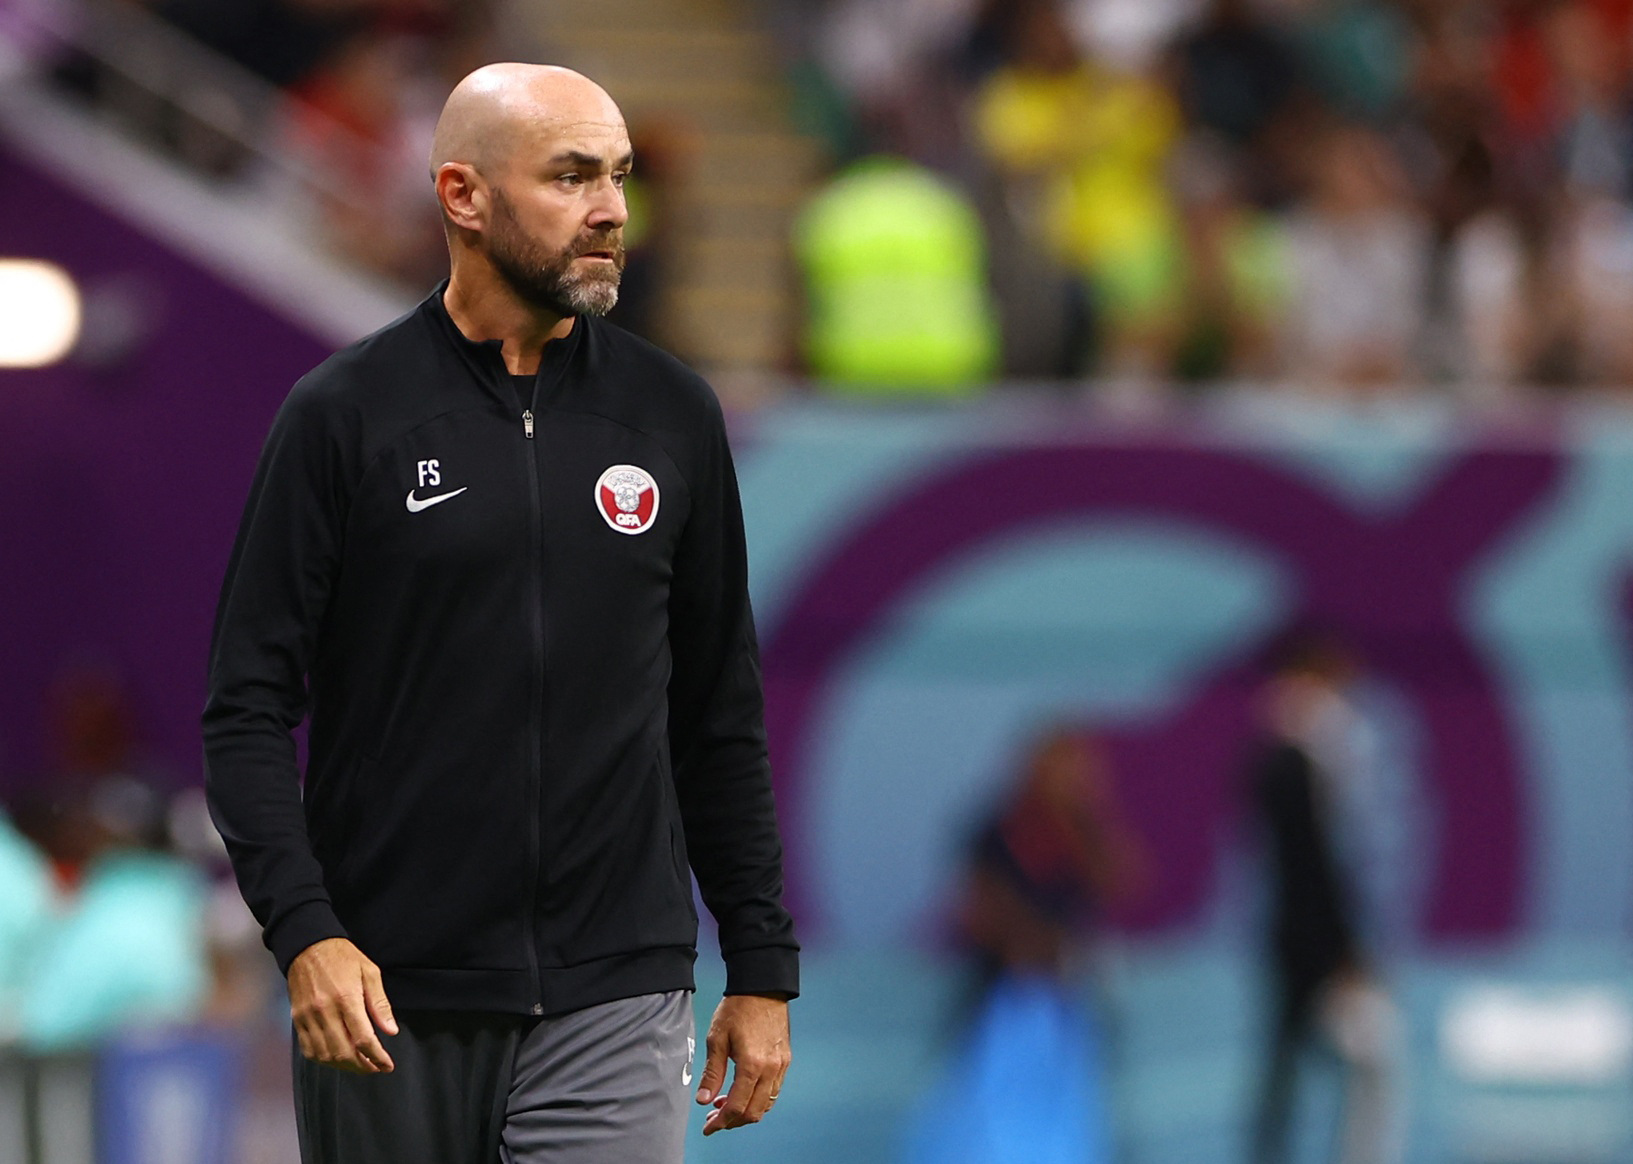 Ecuador appoint former Qatar coach Sanchez as manager | Reuters